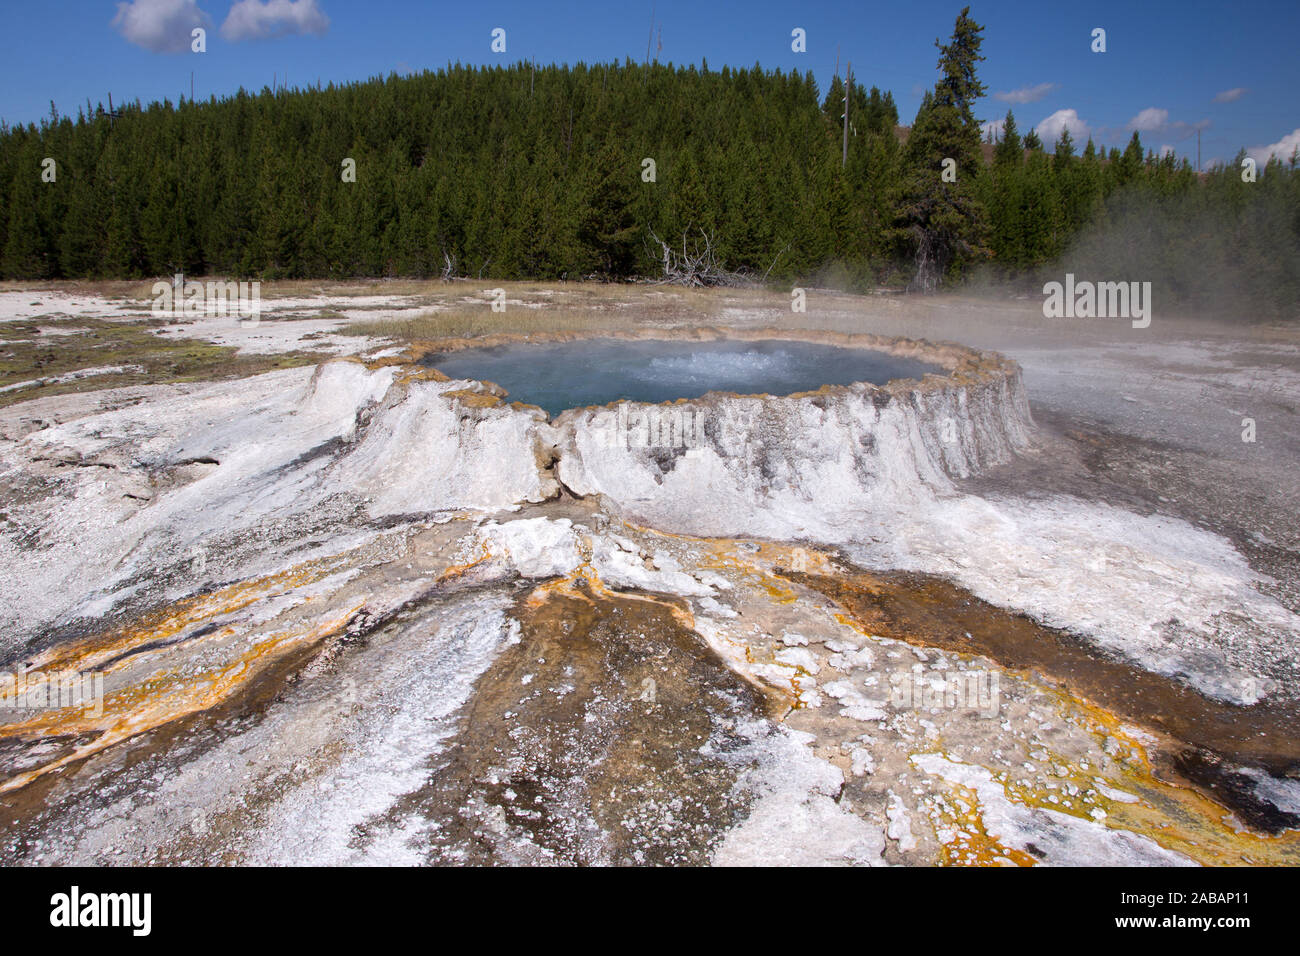 Aufnahme im Nationalpark Yellowstone, Utah, Stati Uniti d'America, IM OKTOBER. Foto Stock